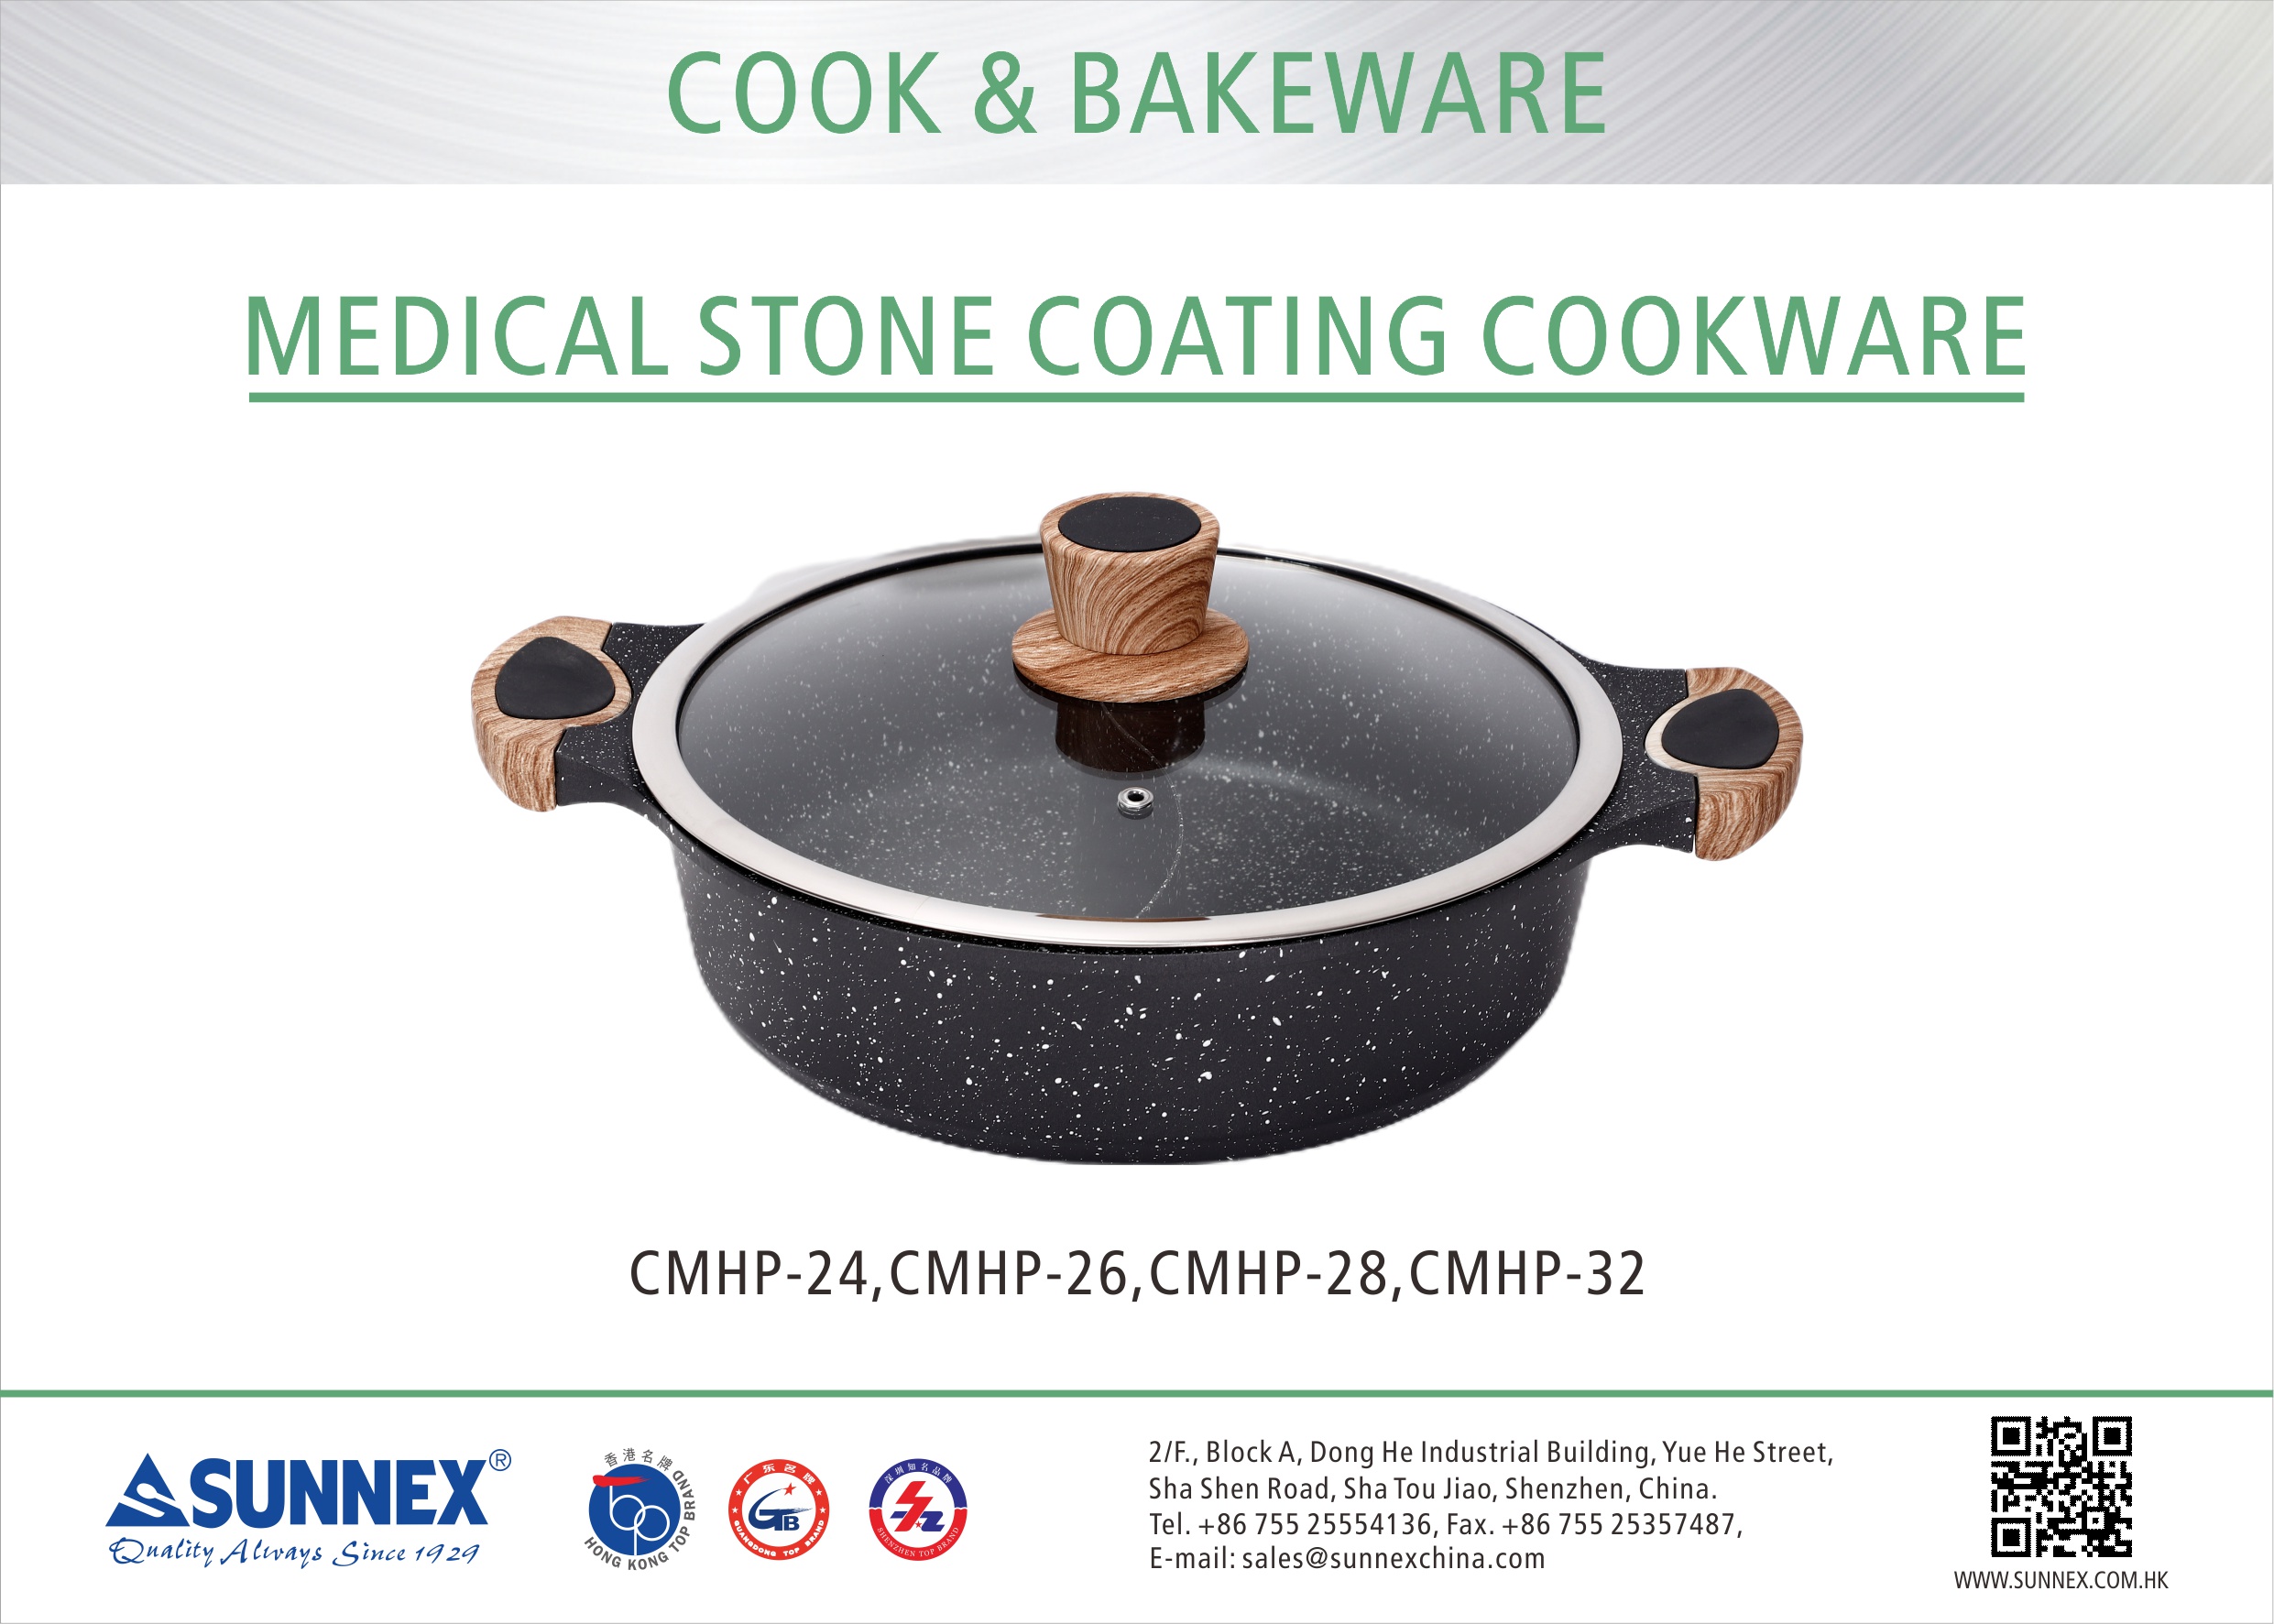 SUNNEX medical stone coating cookware